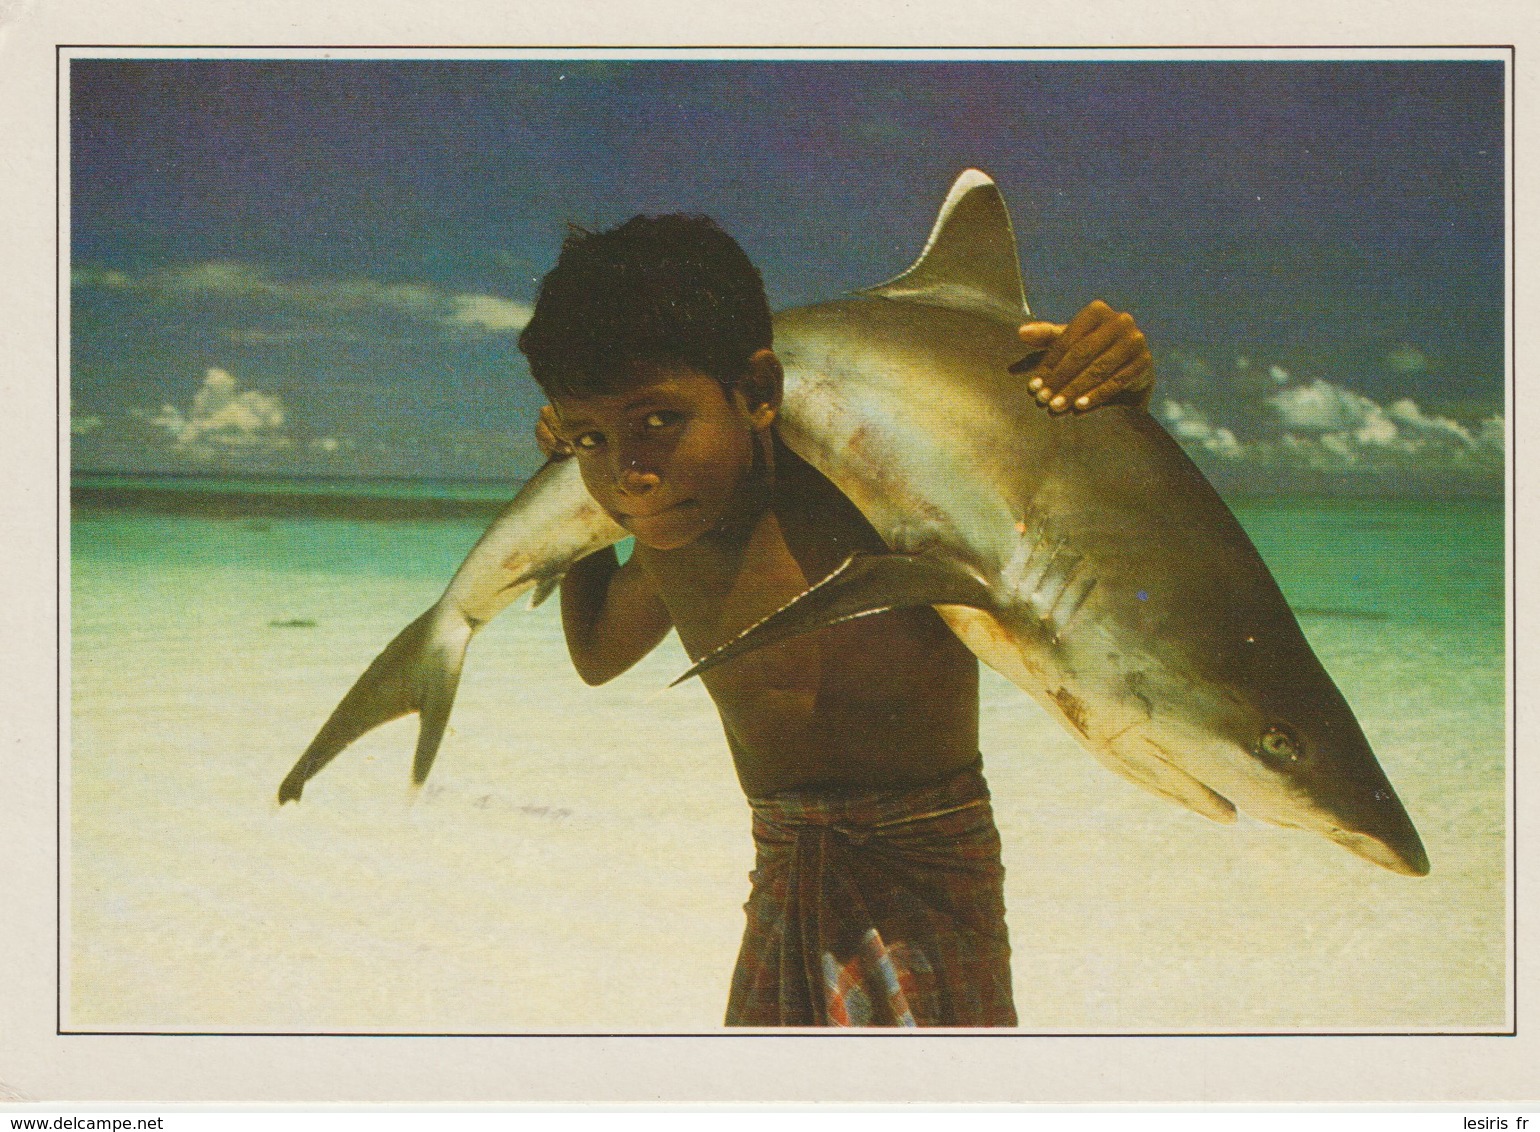 CP - PHOTO - MALEDIVEN XV - THE MALDIVES - WHITE TIPPED SHARK CARRIED BY A YOUNG CHILD - EDITO SERVICE - 1989 - 1990 - Maldiven